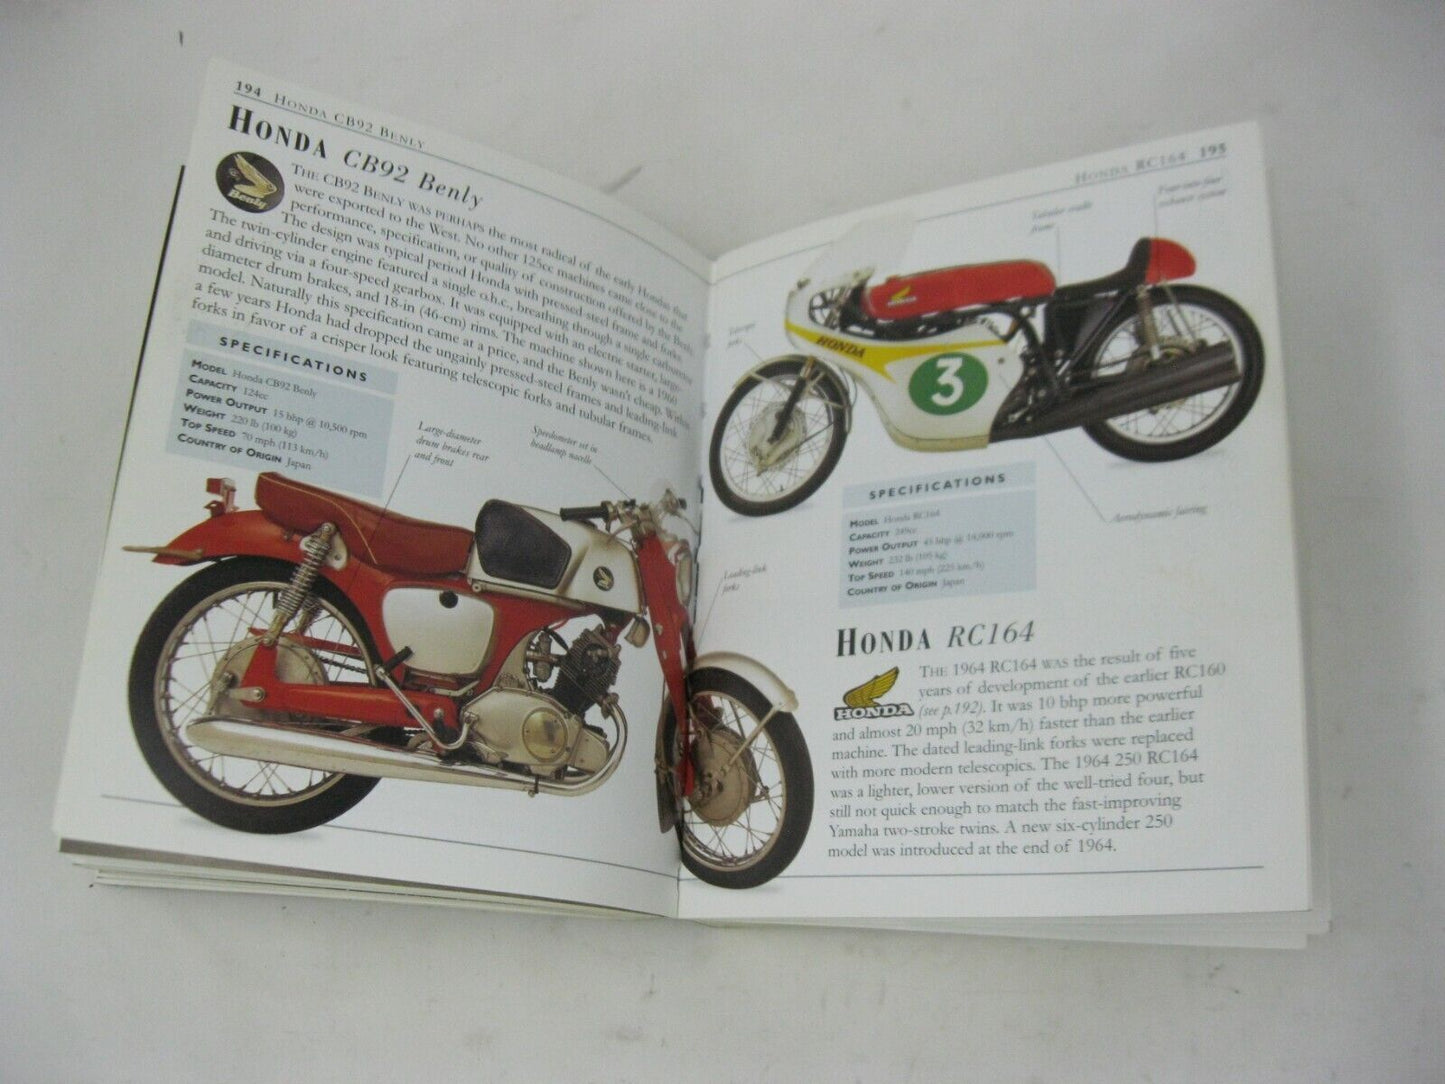 Hugo Wilson's Hot Bikes 2001 Softcover